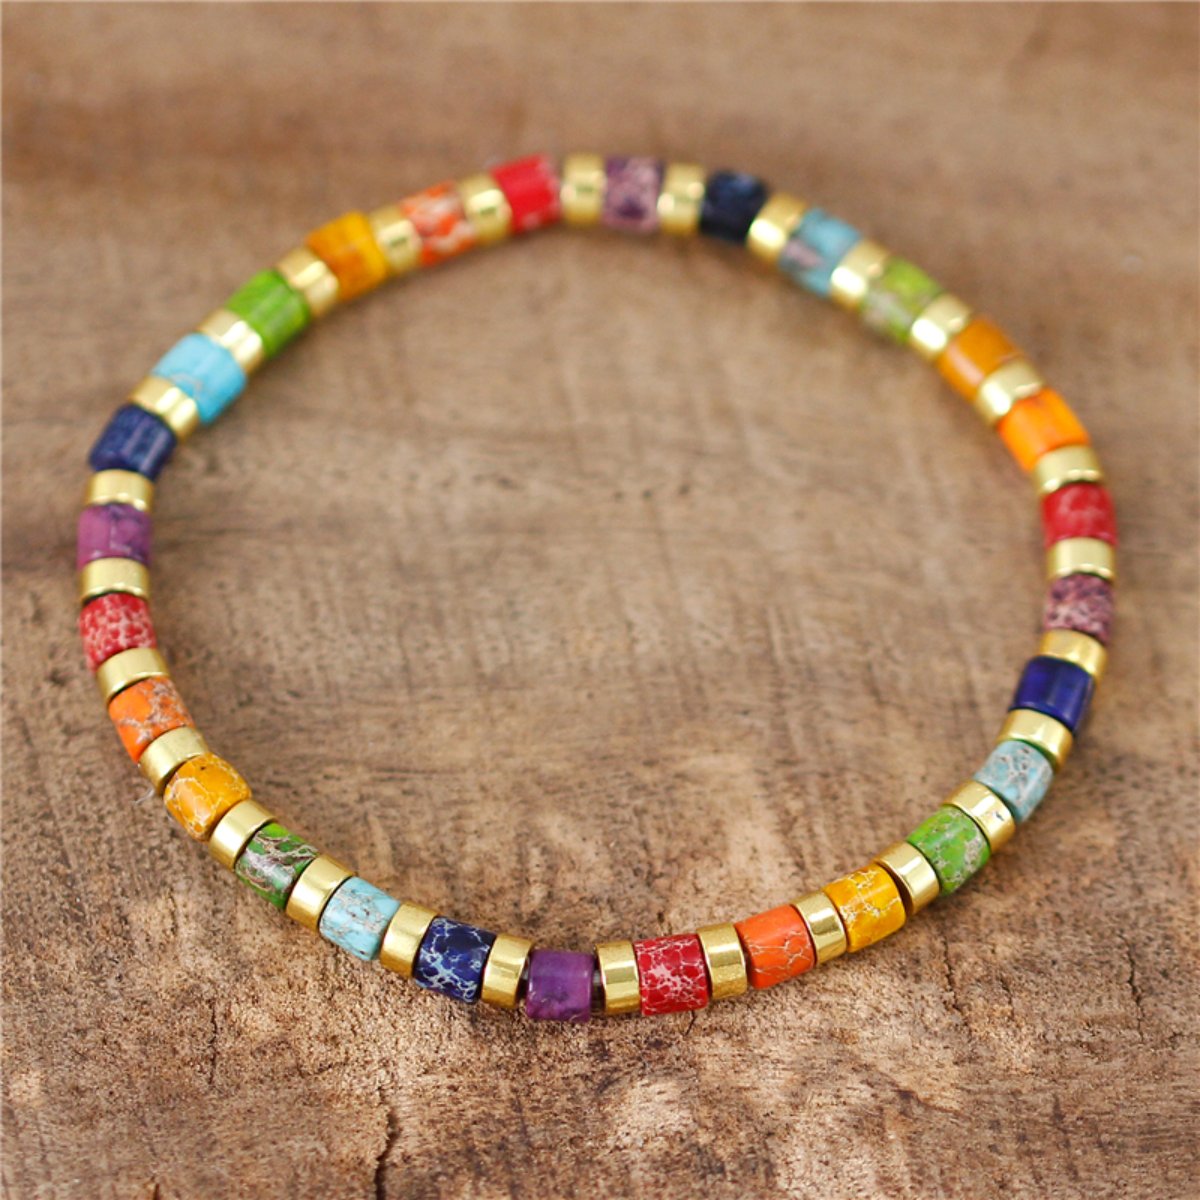 Ethnic Natural Stone Jaspers Beads Bracelet - Multi colors - Bracelets - Pretland | Spiritual Crystals & Jewelry